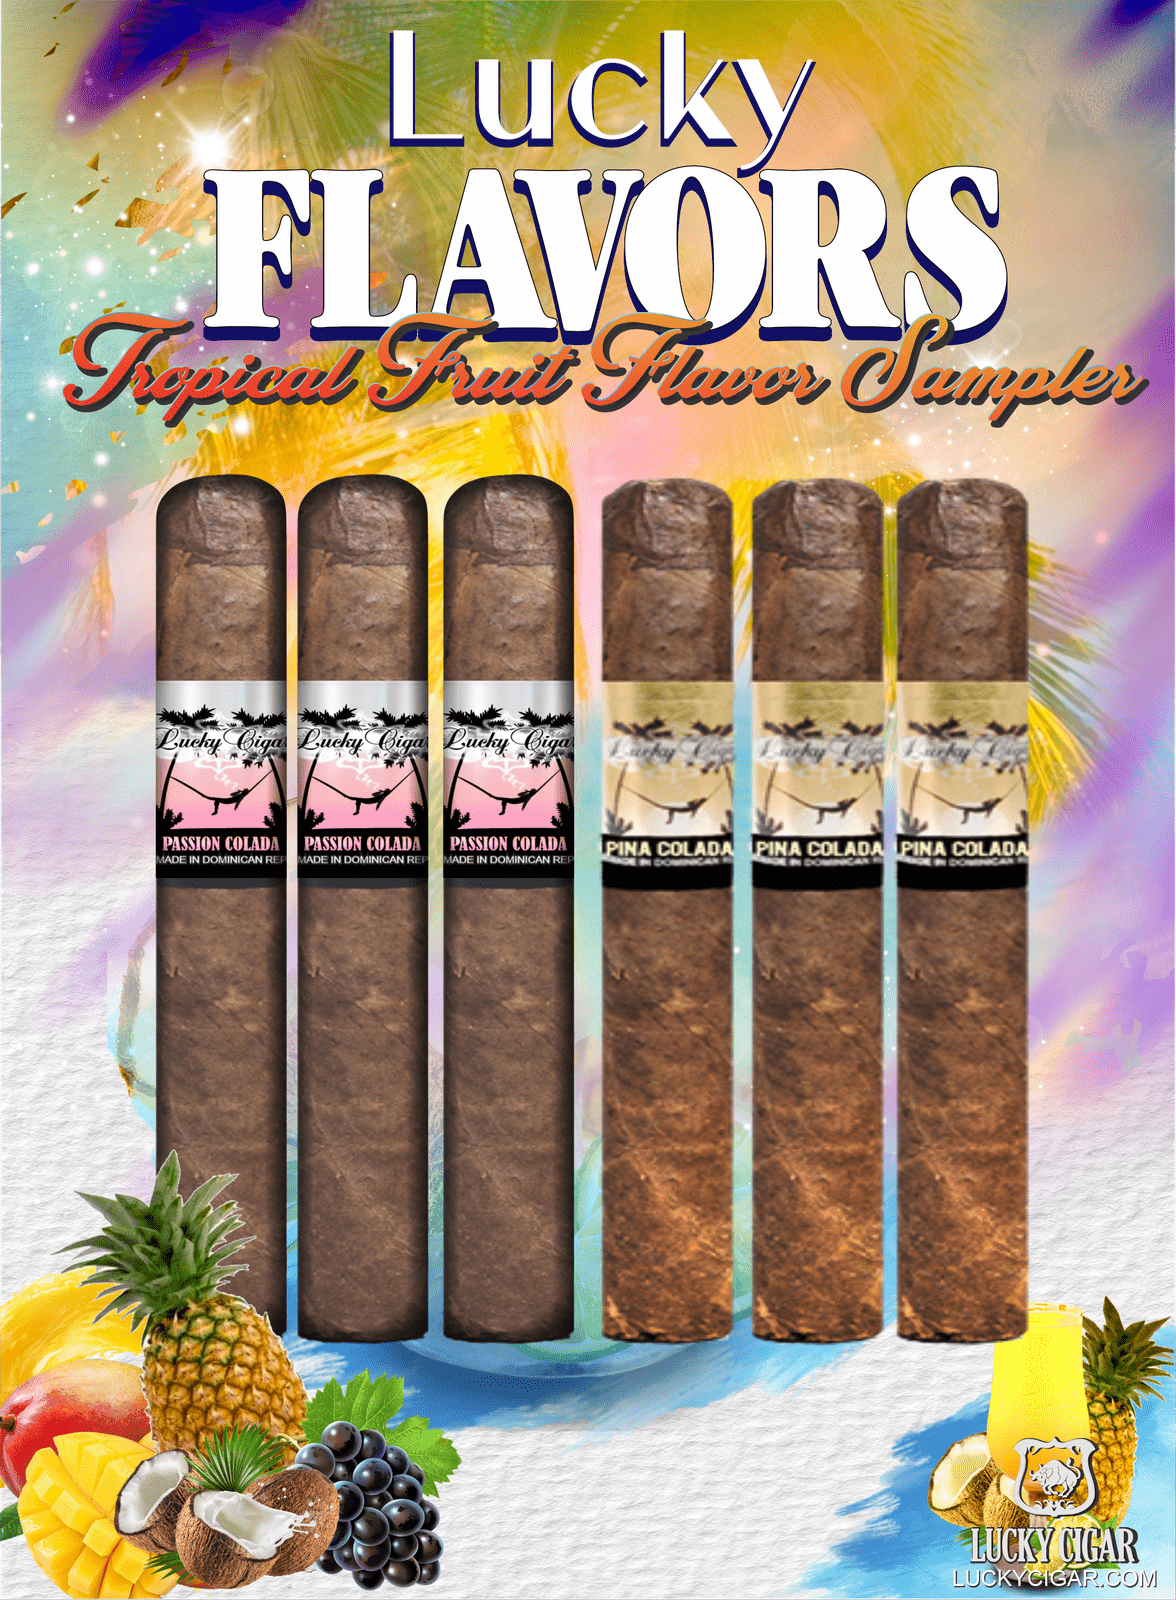 Flavored Cigars: Lucky Flavors 6 Piece Tropical Fruit Sampler - Pina Colada, Passion Colada